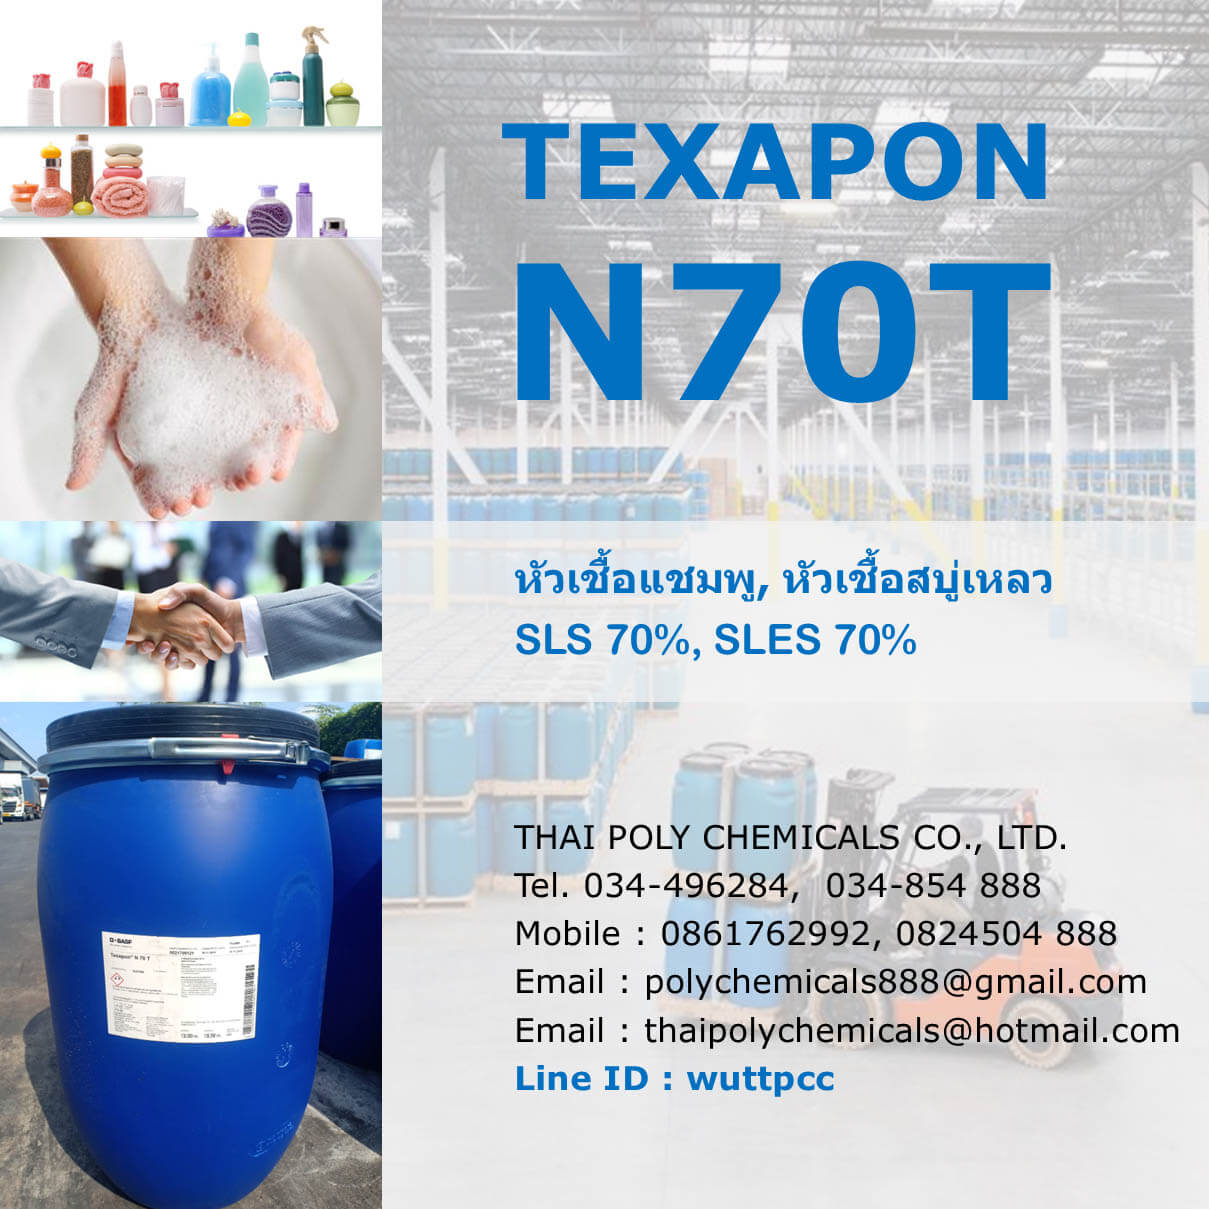 Texapon N70, โซเดียมลอเรตซัลเฟต, Sodium Laureth Sulphate, SLS 70, Laureth Sulfate, หัวสบู่, หัวแชมพู